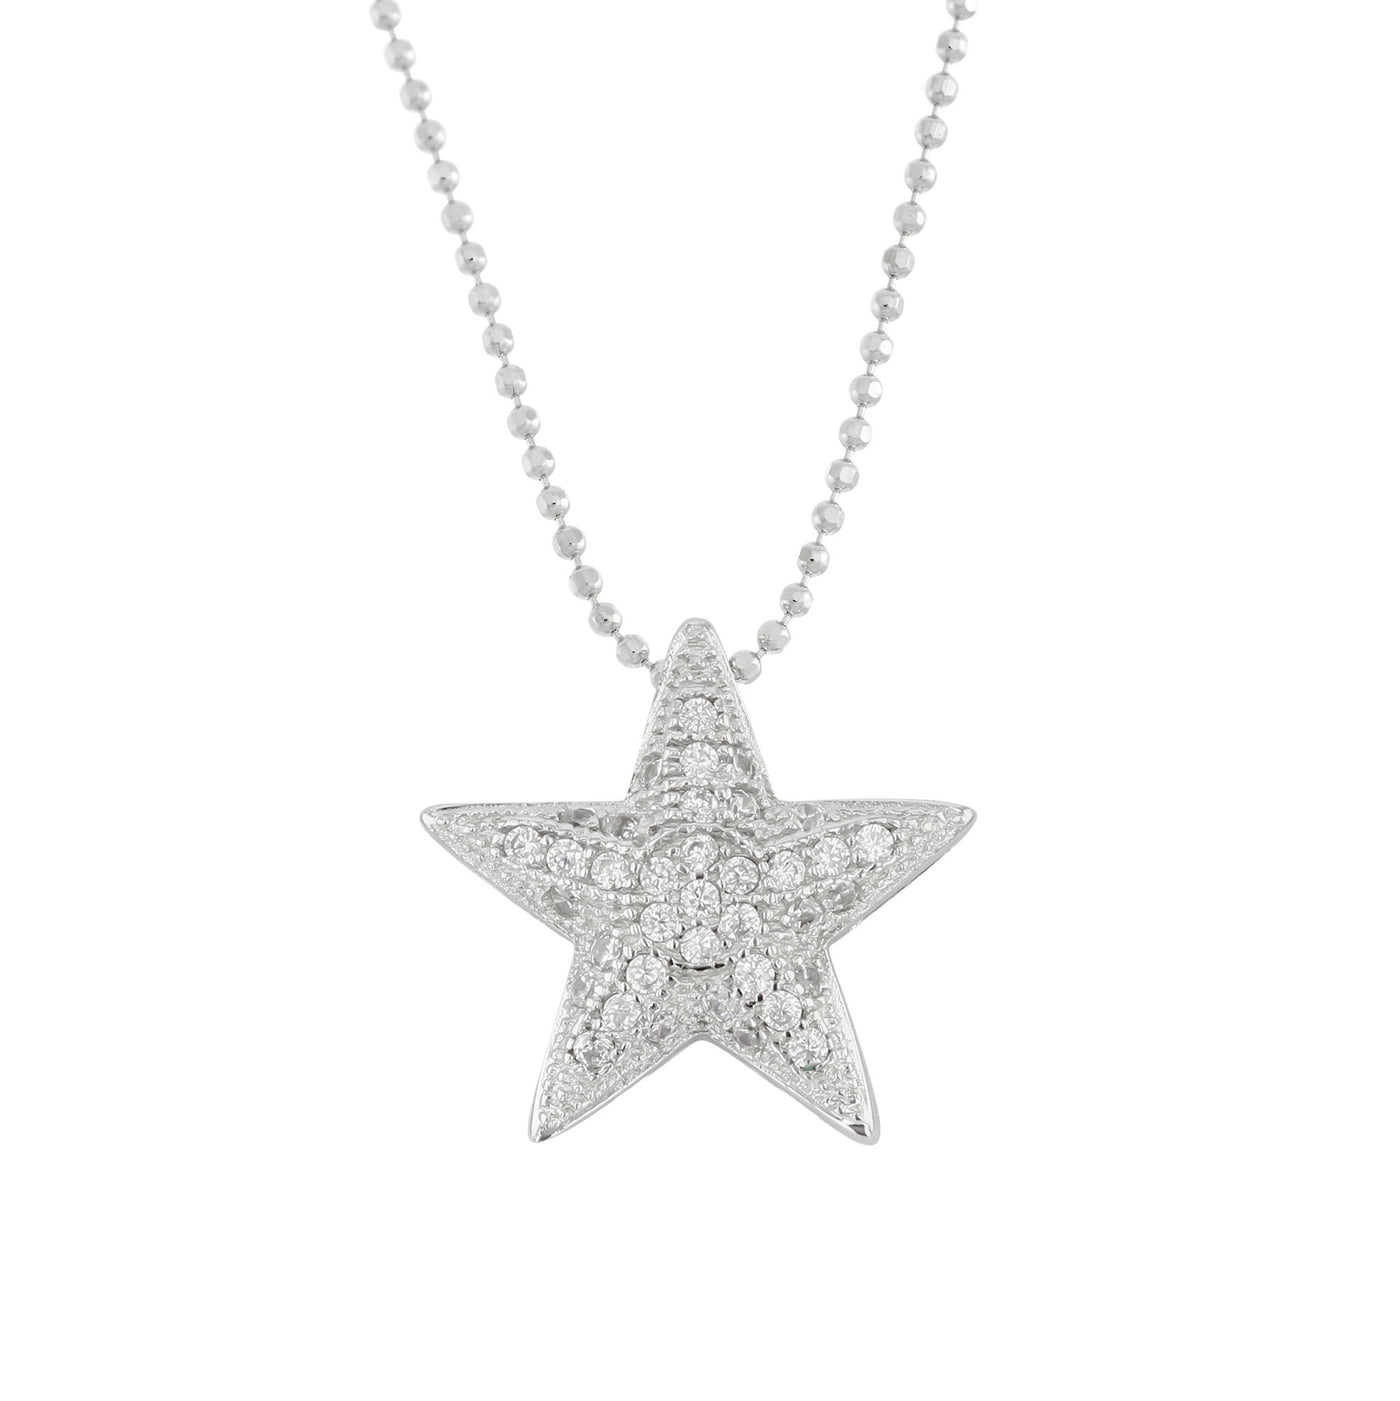 Rebecca Sloane Silver Puffed Star With CZ Pendant